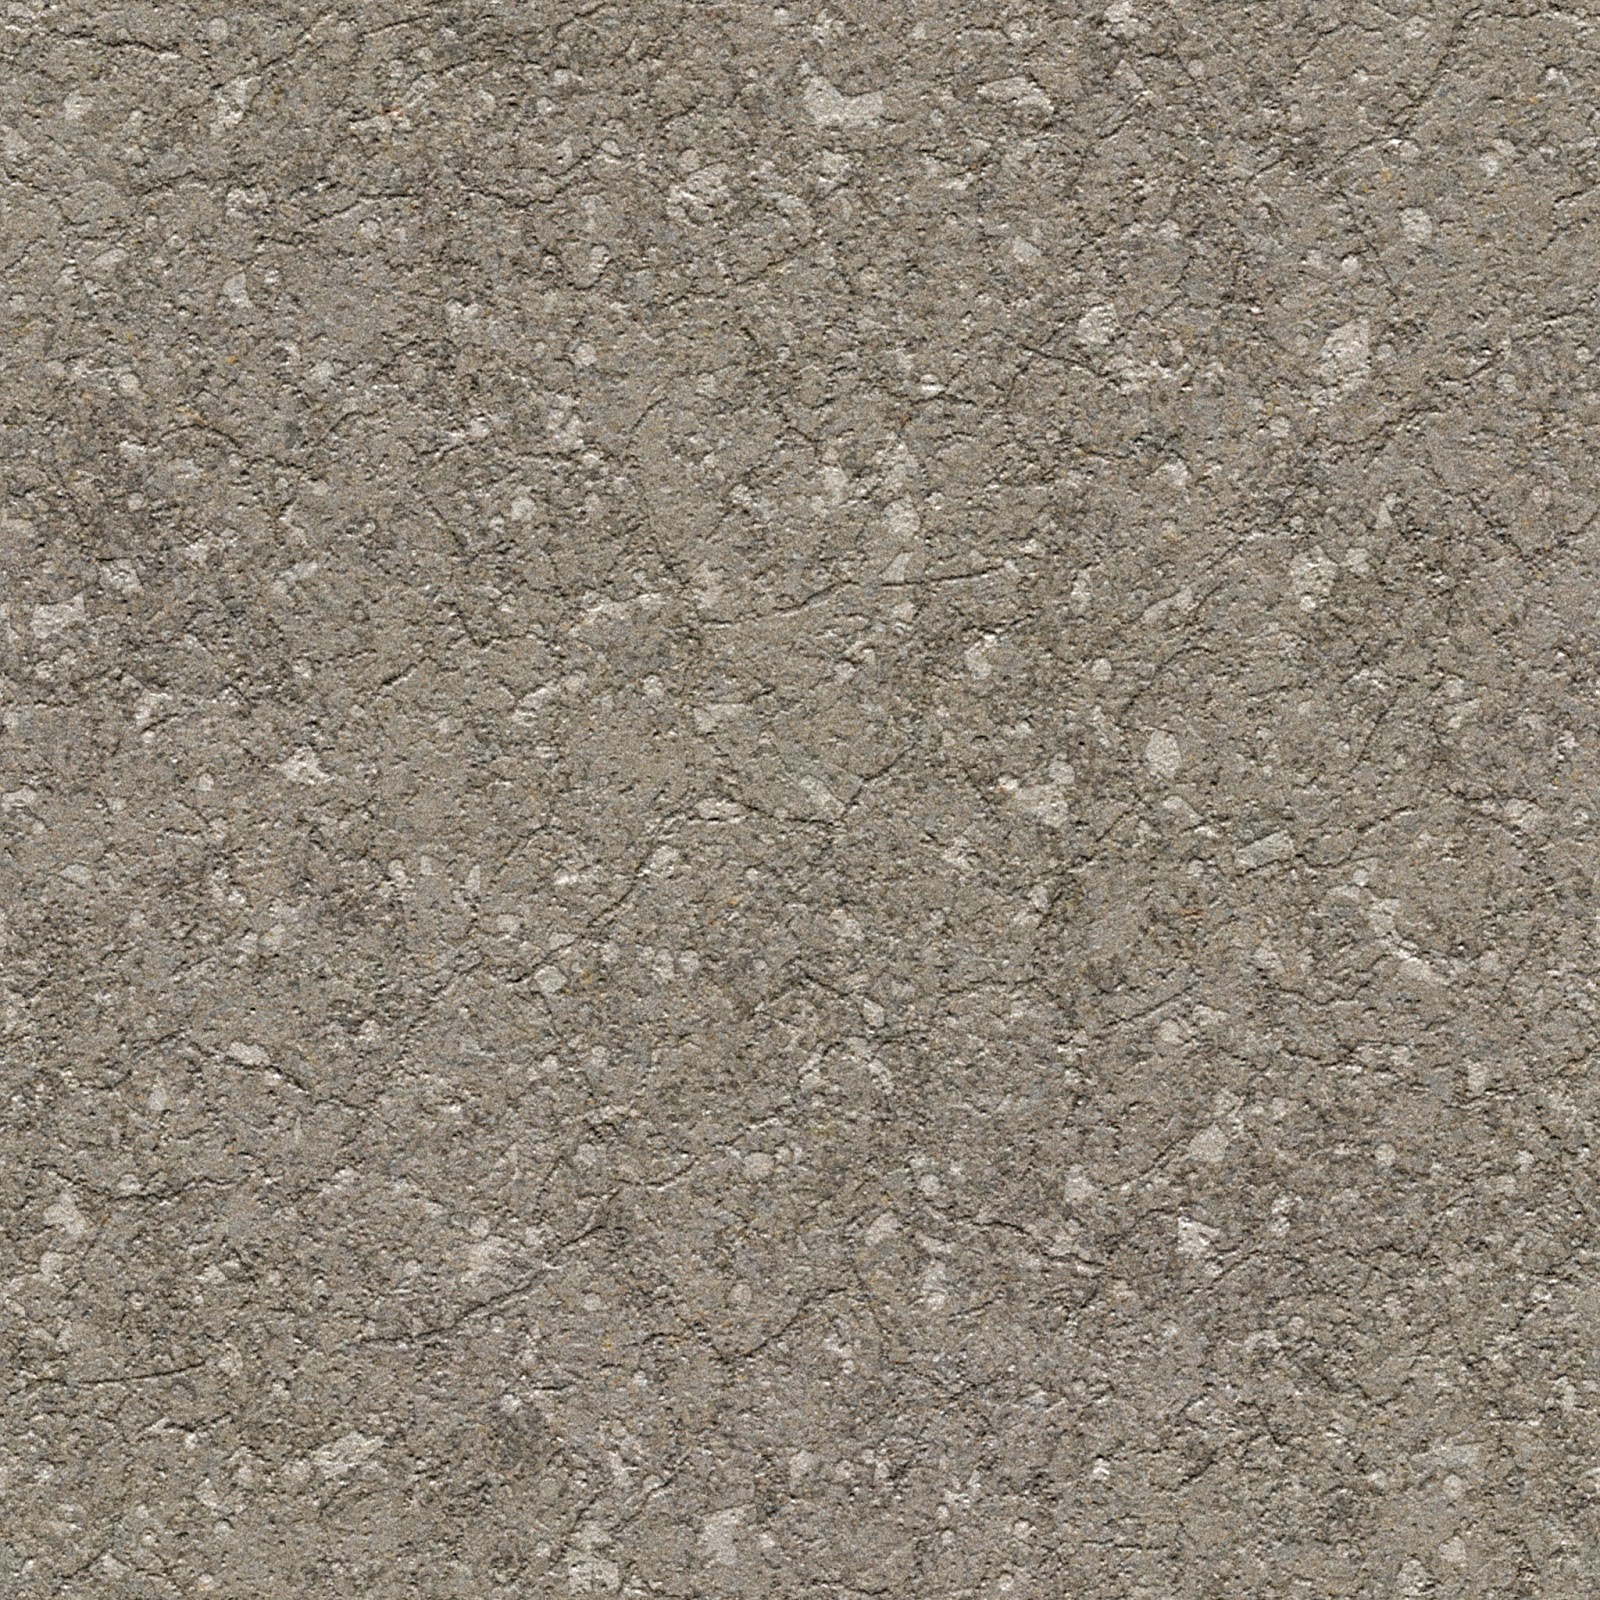 Concrete_white patterns_cracks_wall_seamless_tileable_texture